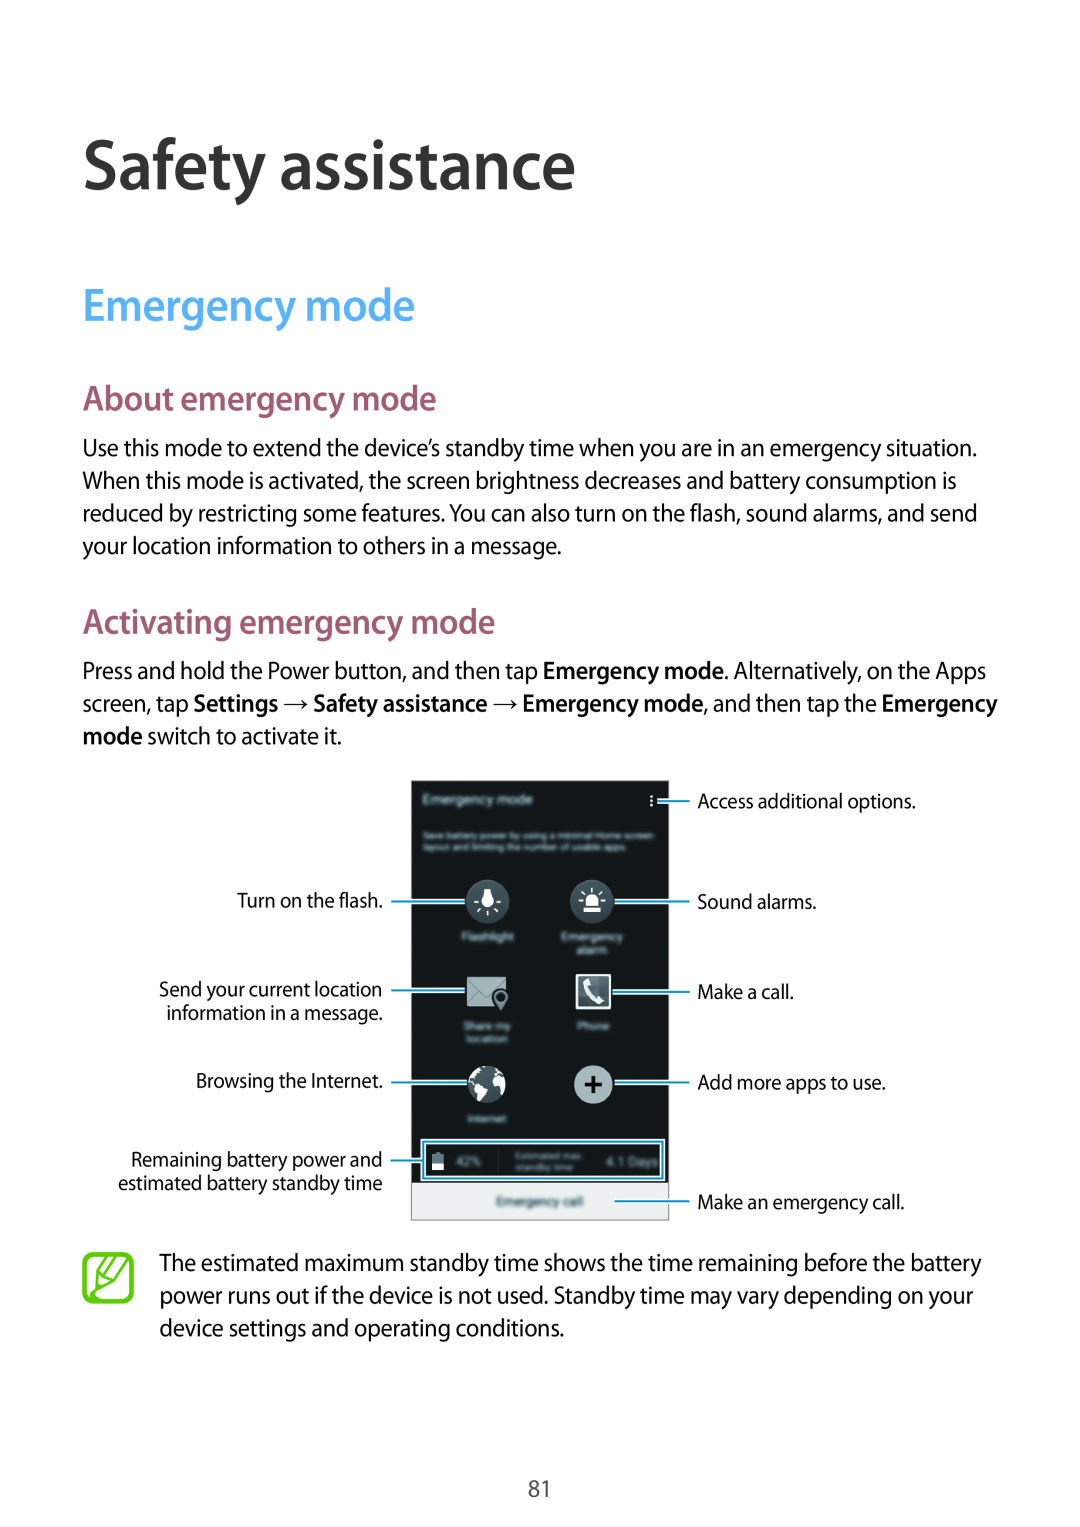 Samsung SM-A700FZKACYO, SM-A700FZKADBT Safety assistance, Emergency mode, About emergency mode, Activating emergency mode 